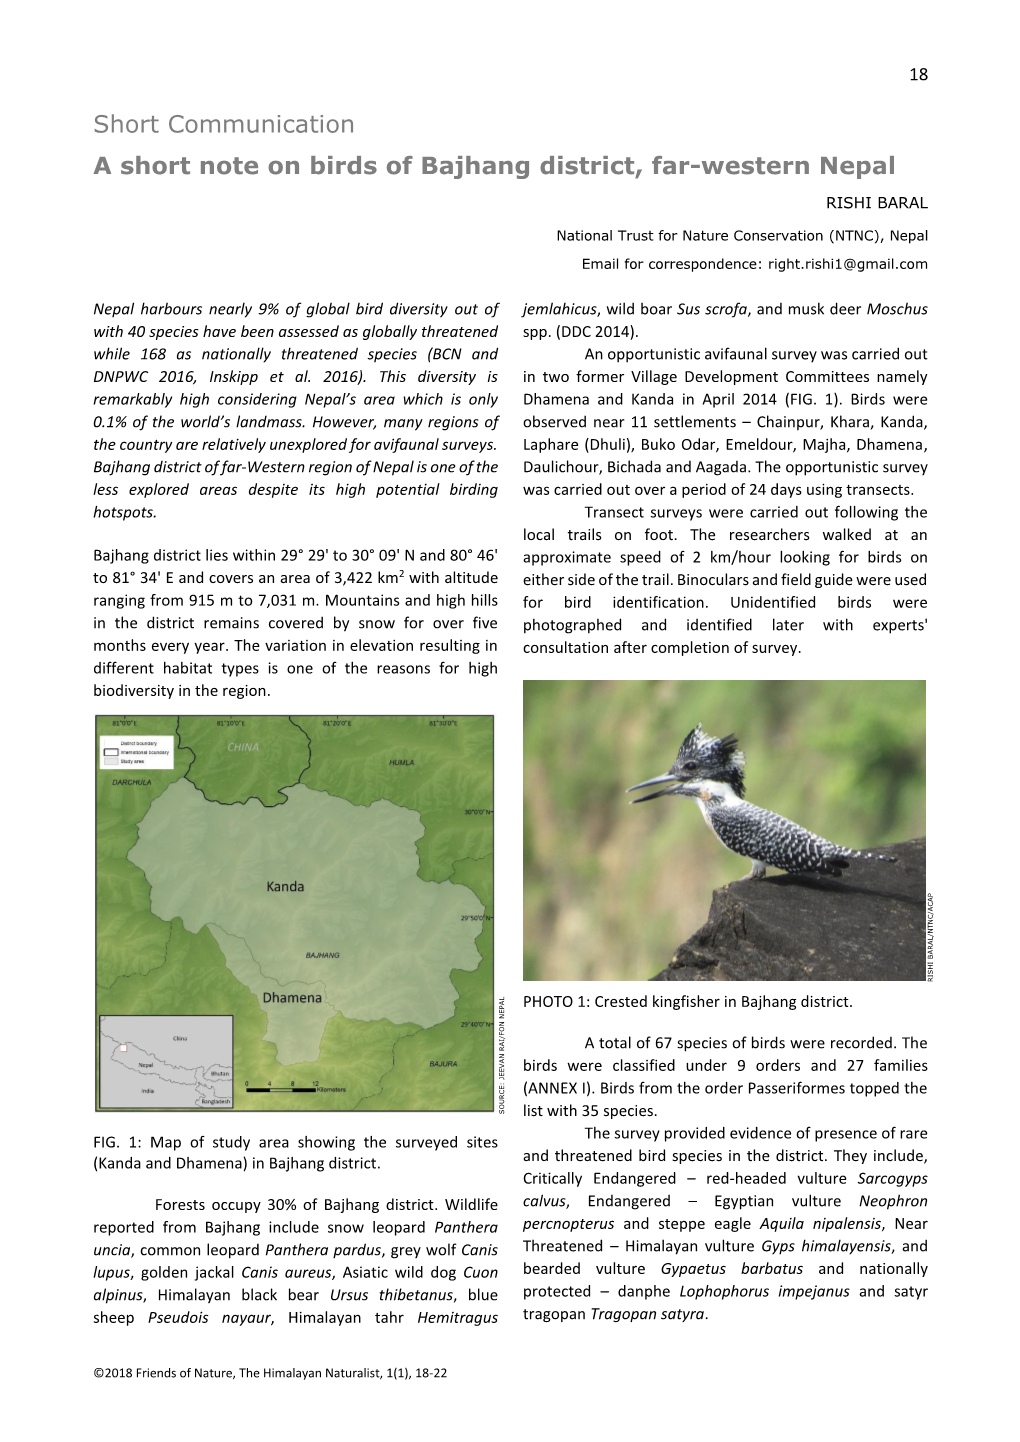 Short Communication a Short Note on Birds of Bajhang District, Far-Western Nepal